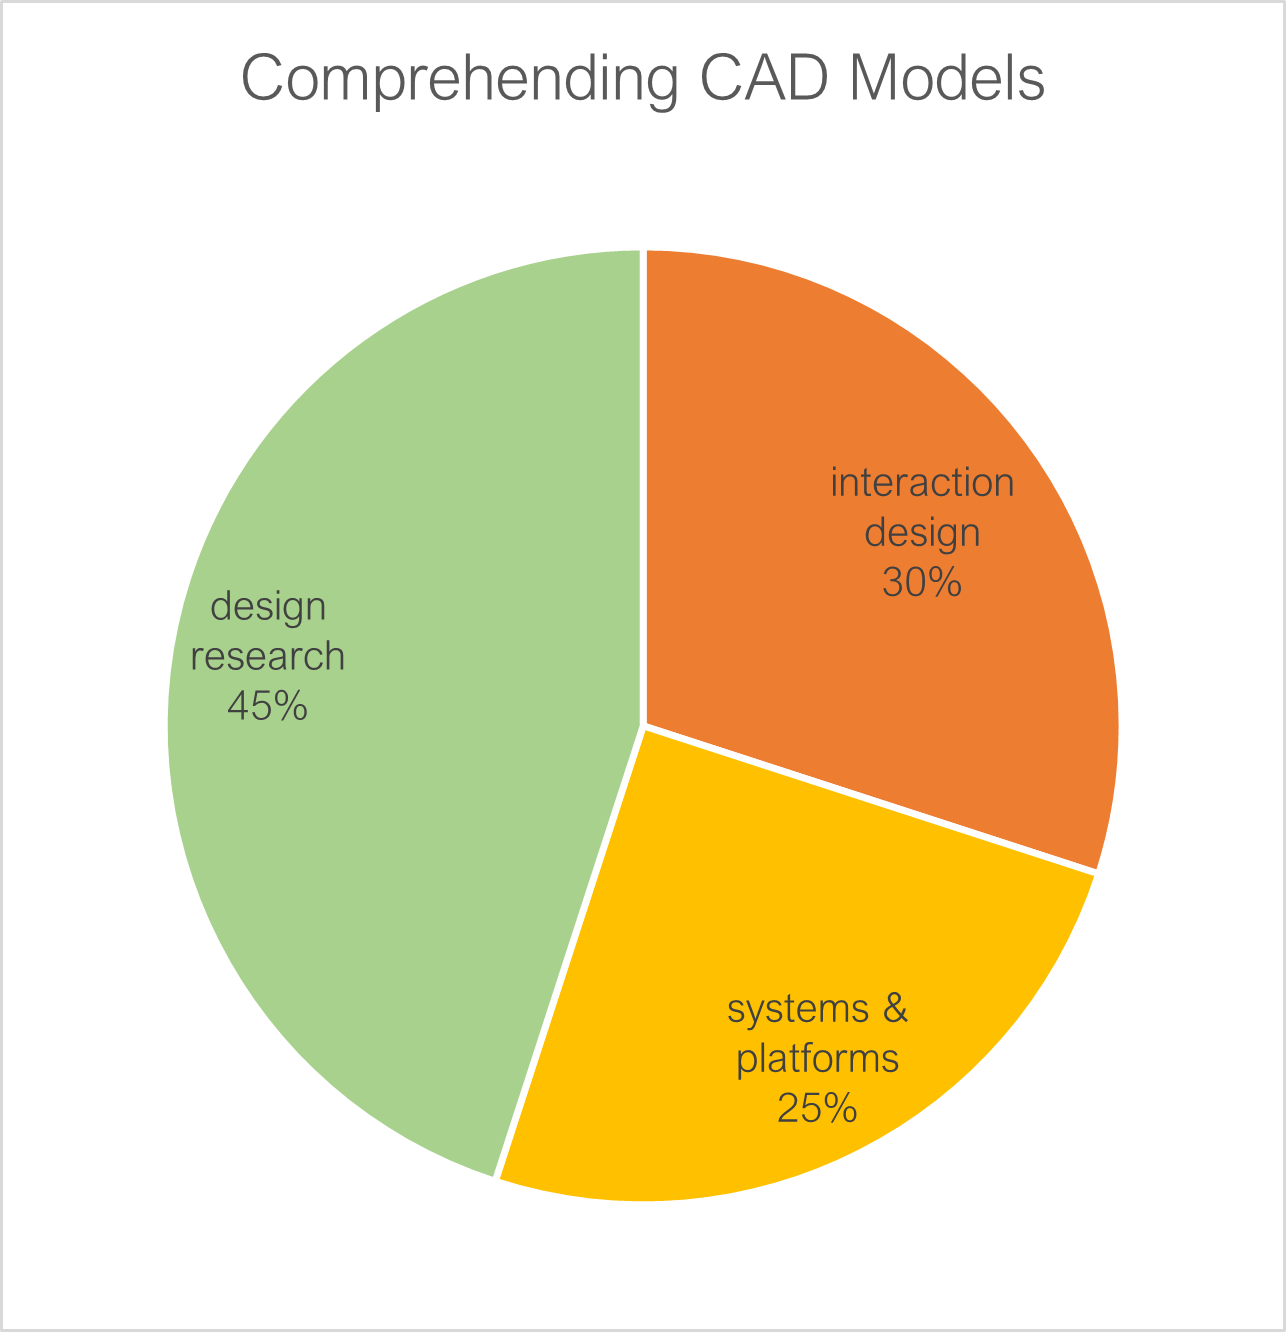 comprehending cad models: activity proportions